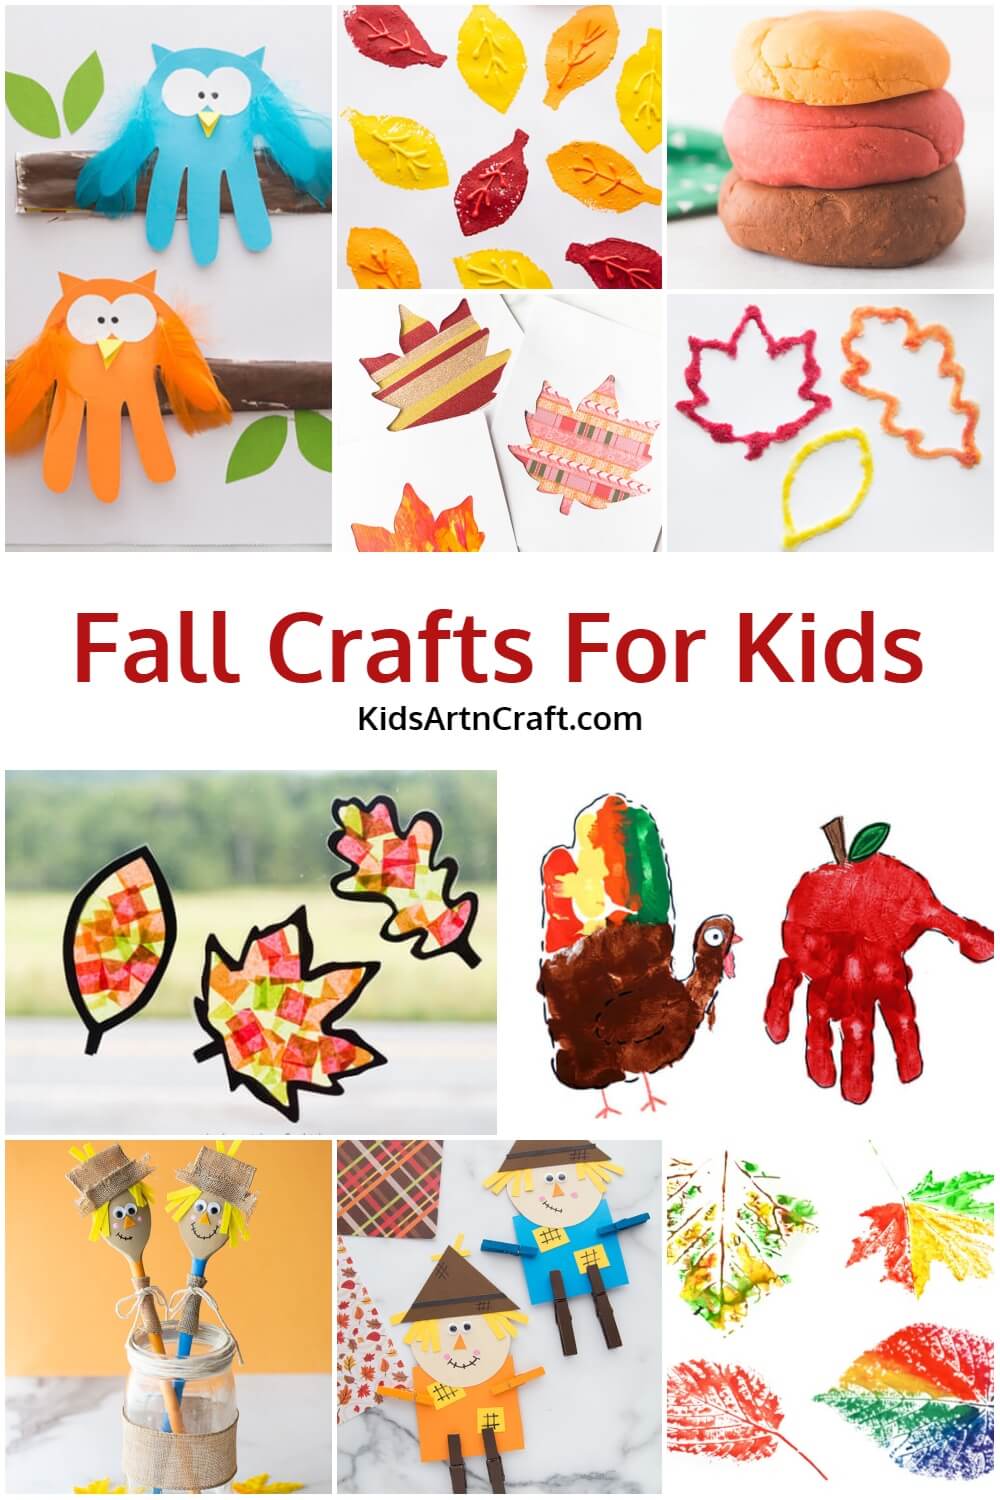 Fall Crafts To Make With Kids - Kids Art & Craft